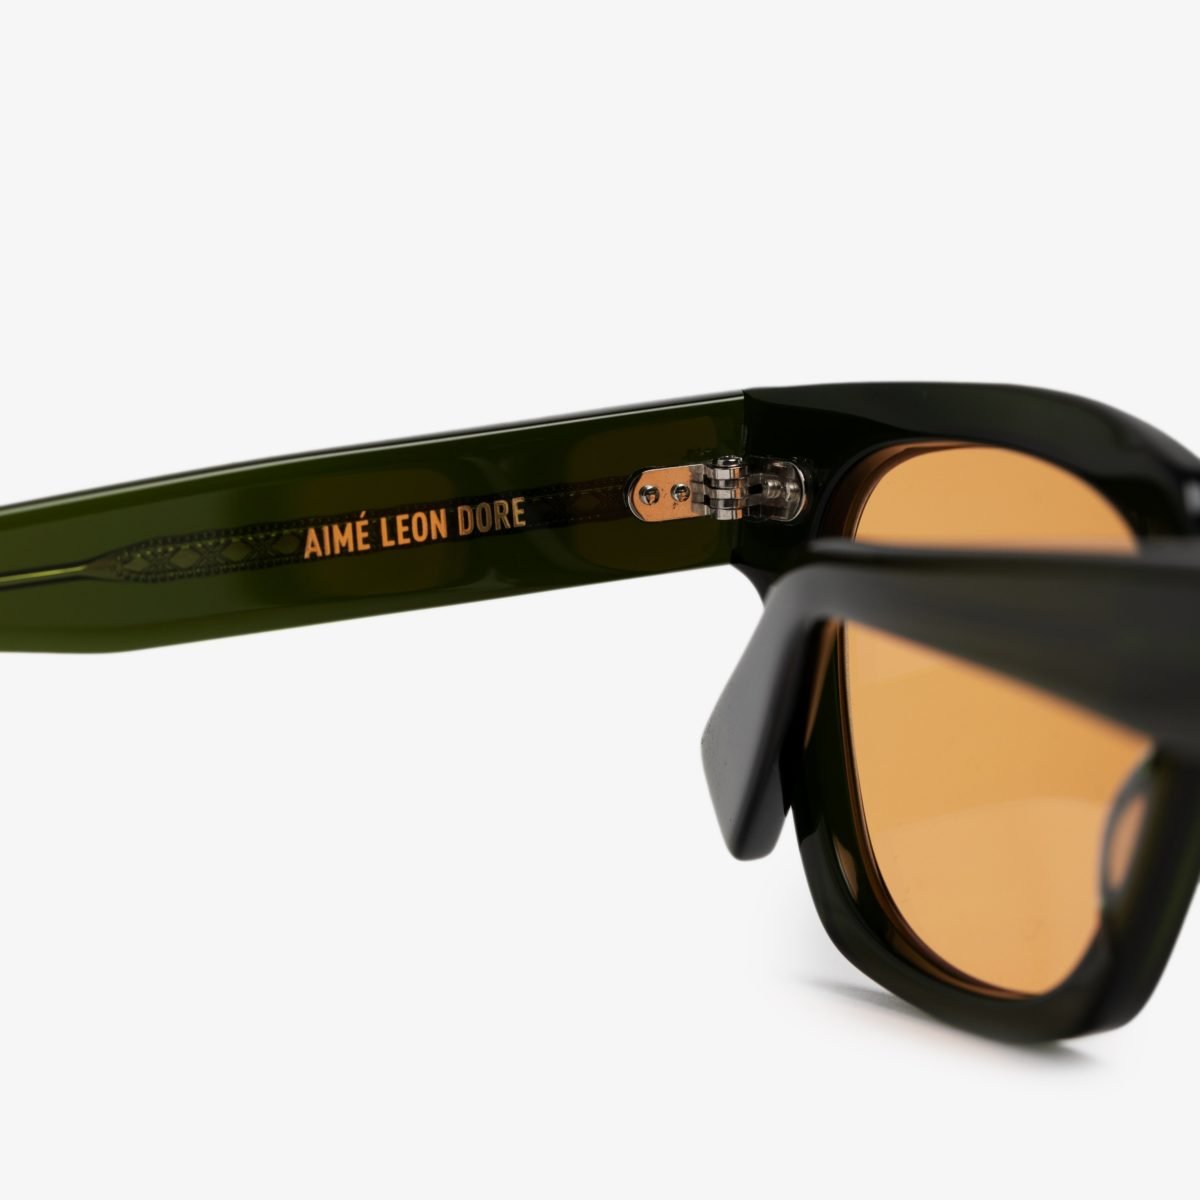 Aimé Leon Dore Launches First Sunglasses Collection